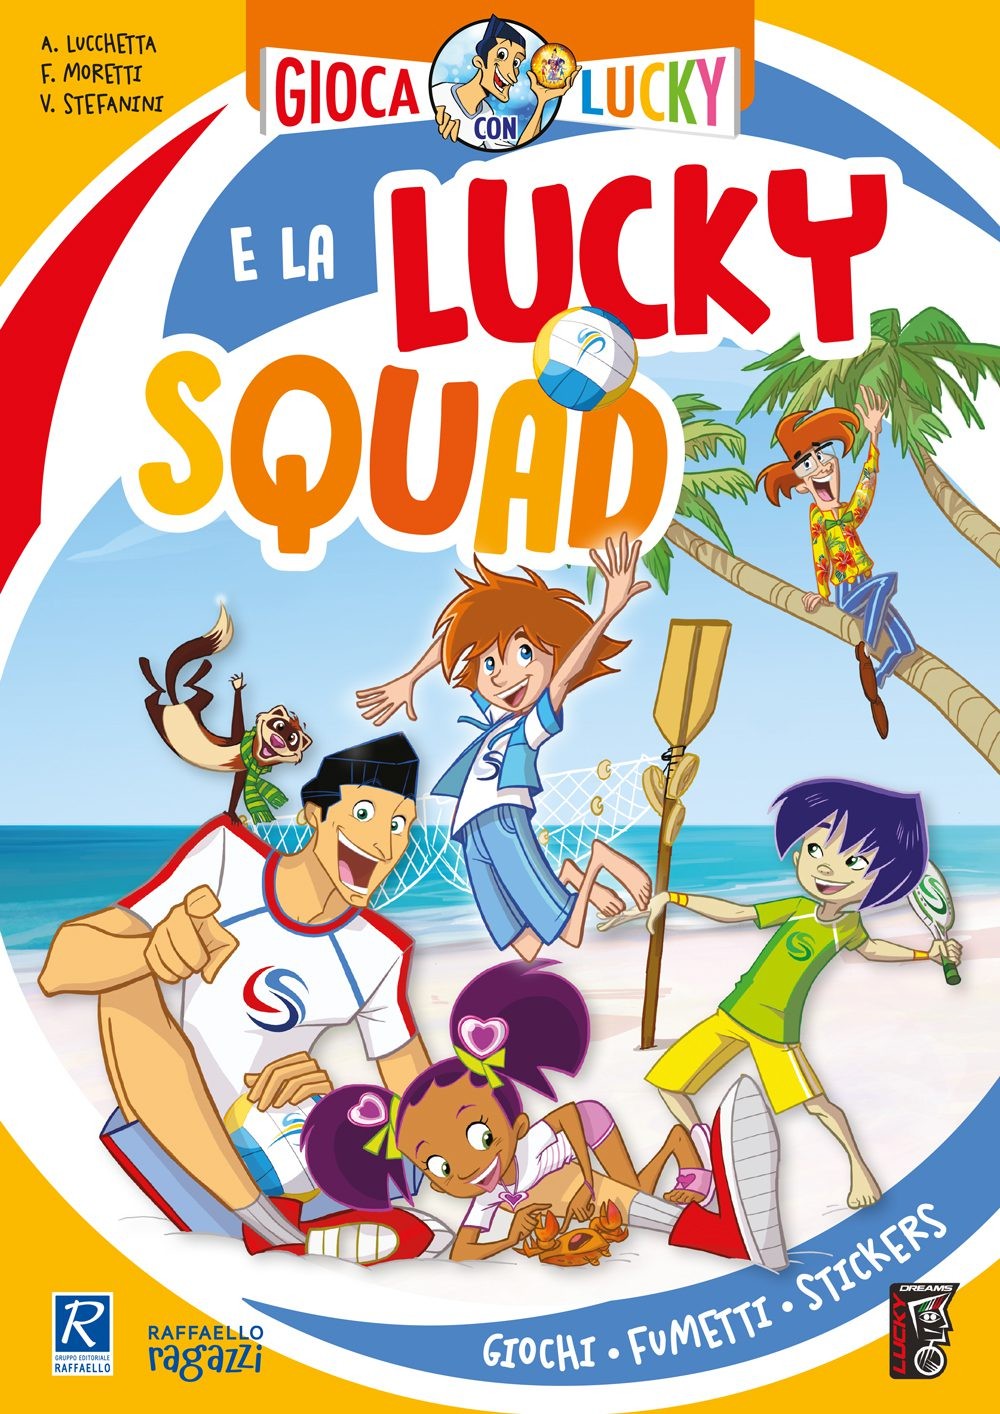 Gioca con Lucky e la Lucky Squad